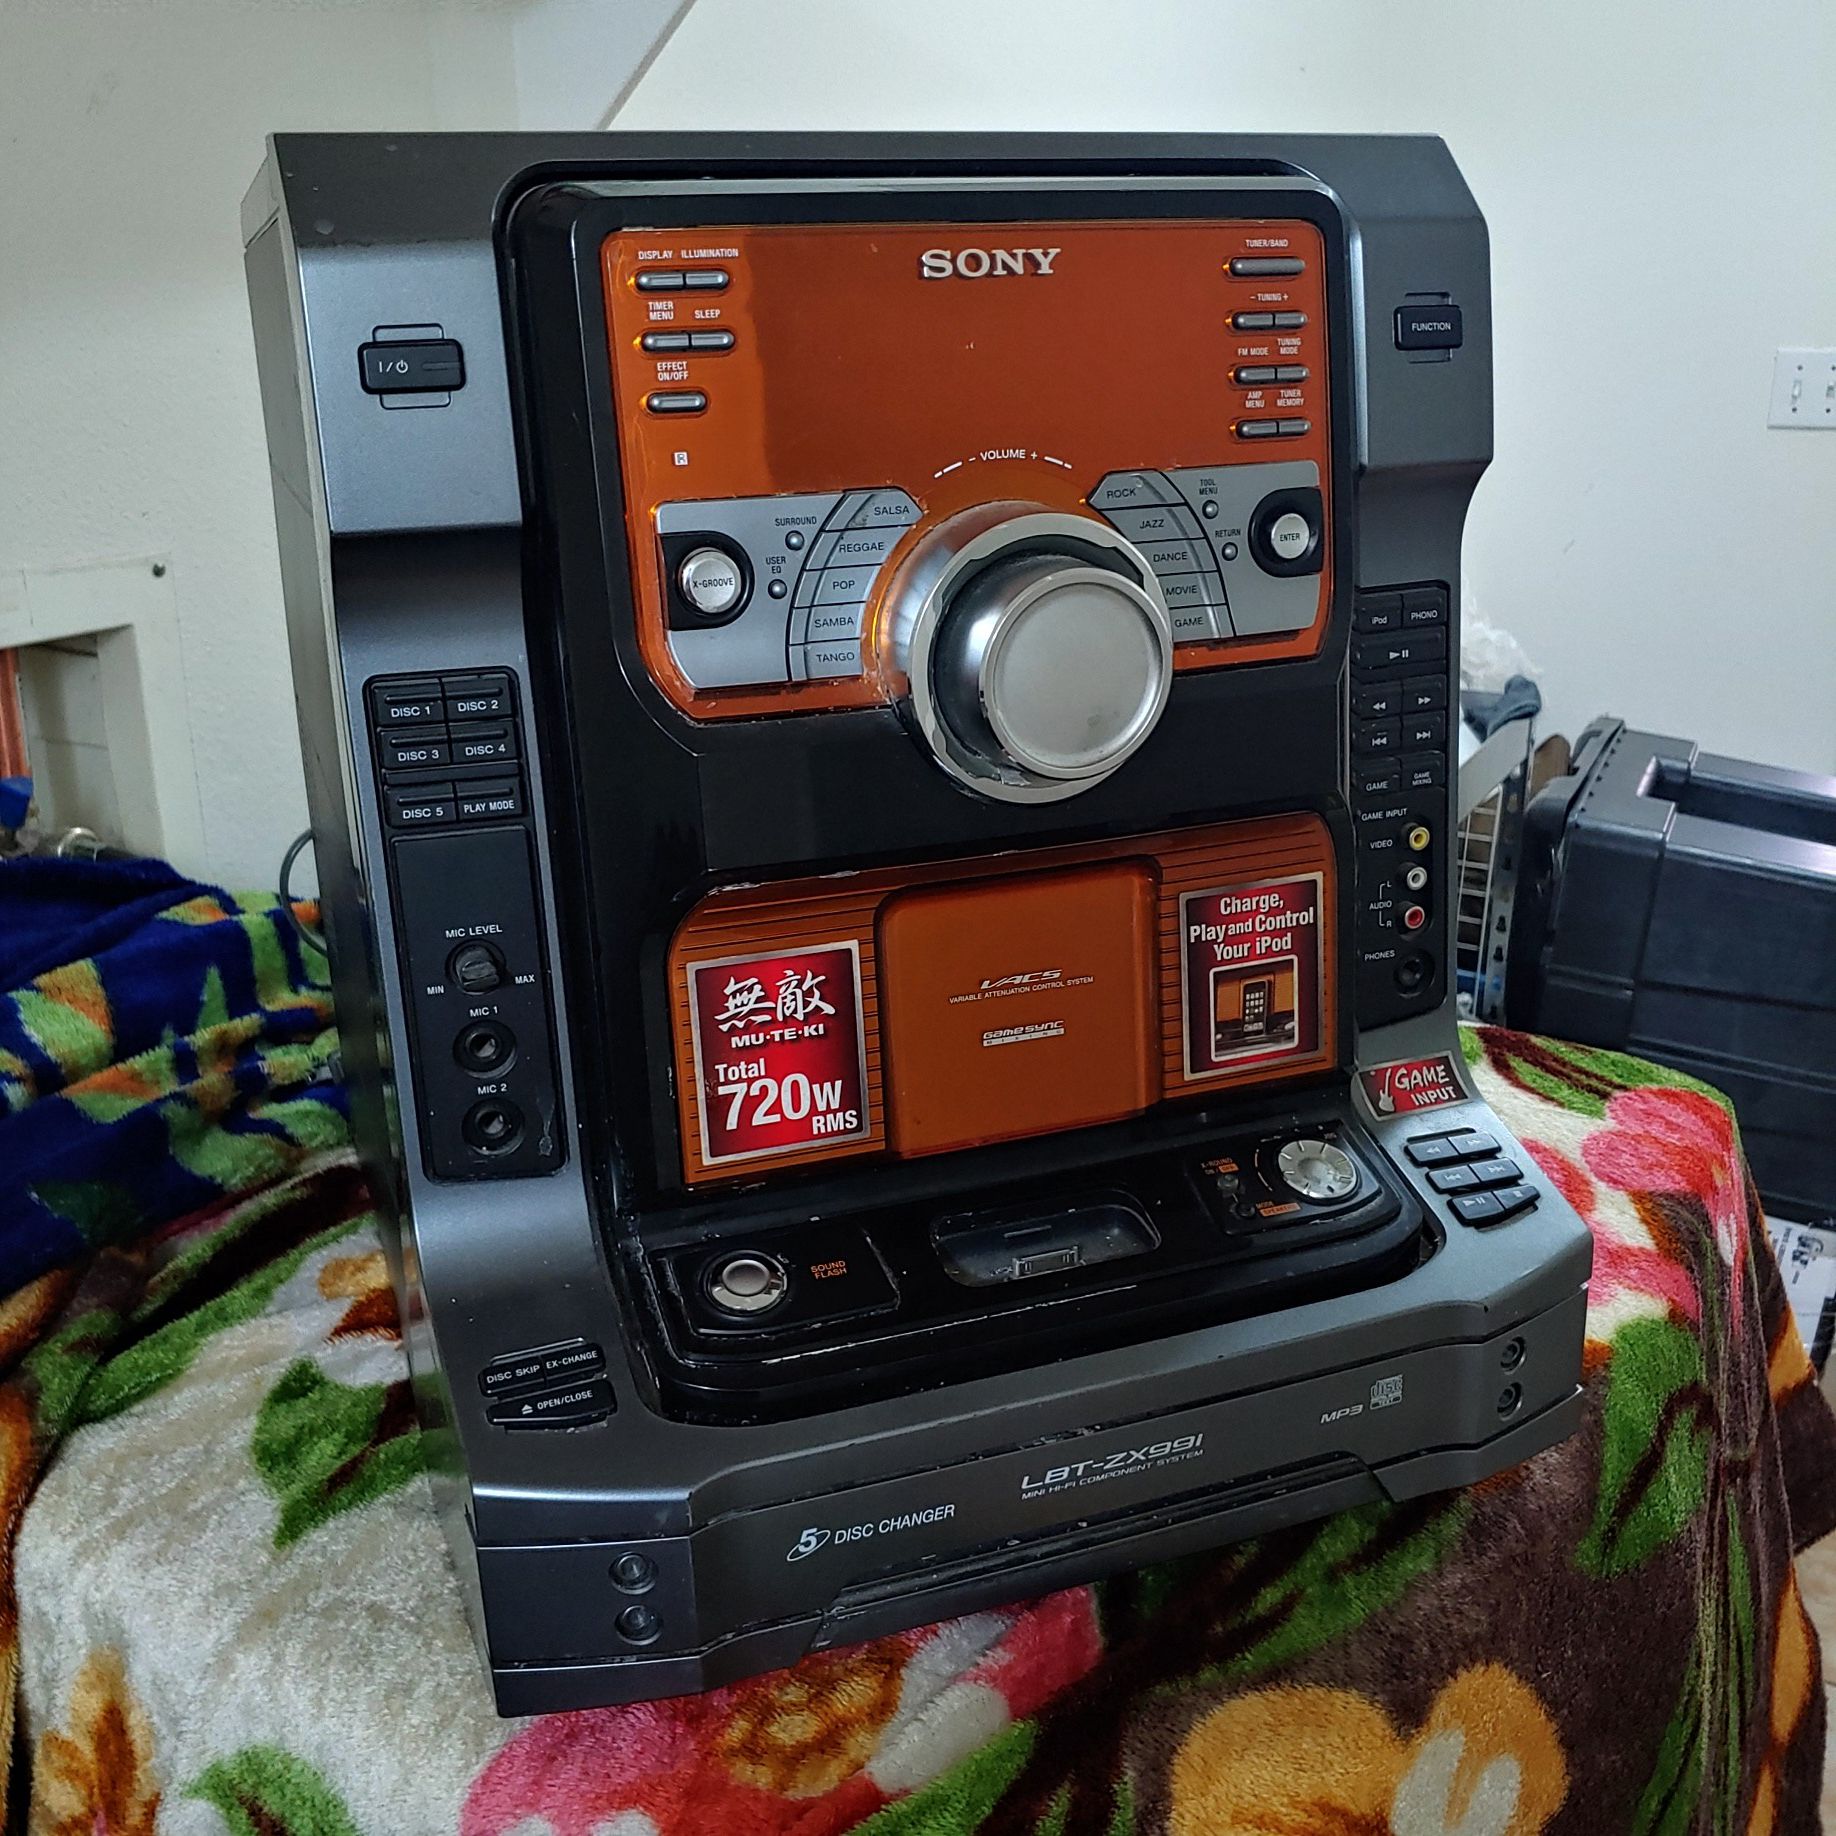 Sony home stereo system